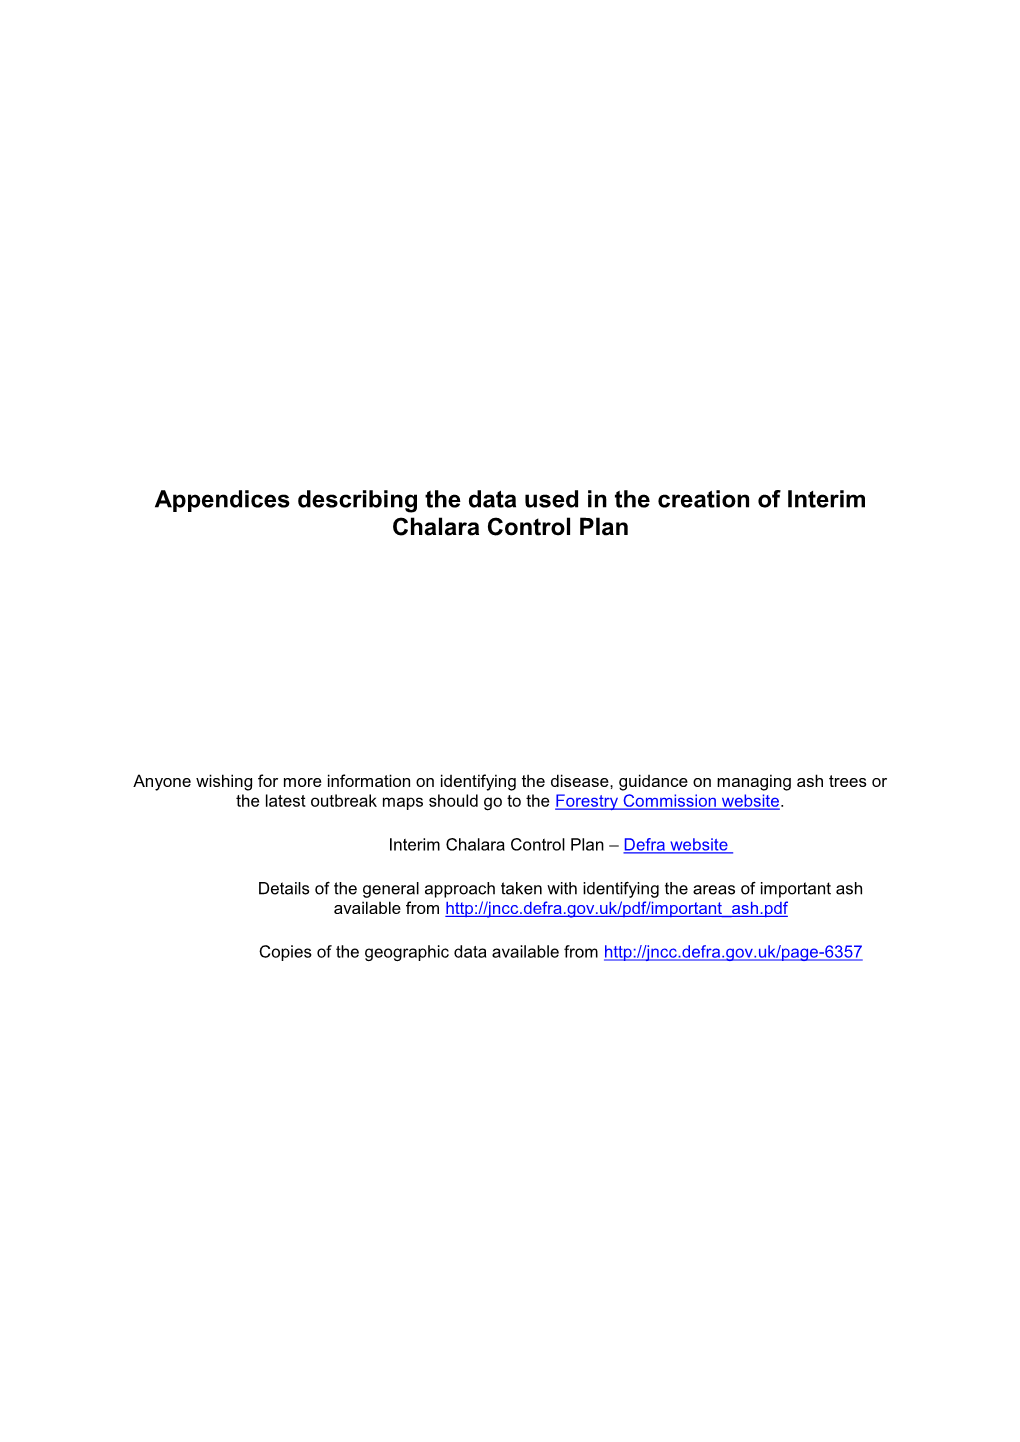 Appendices Describing the Data Used in the Creation of Interim Chalara Control Plan